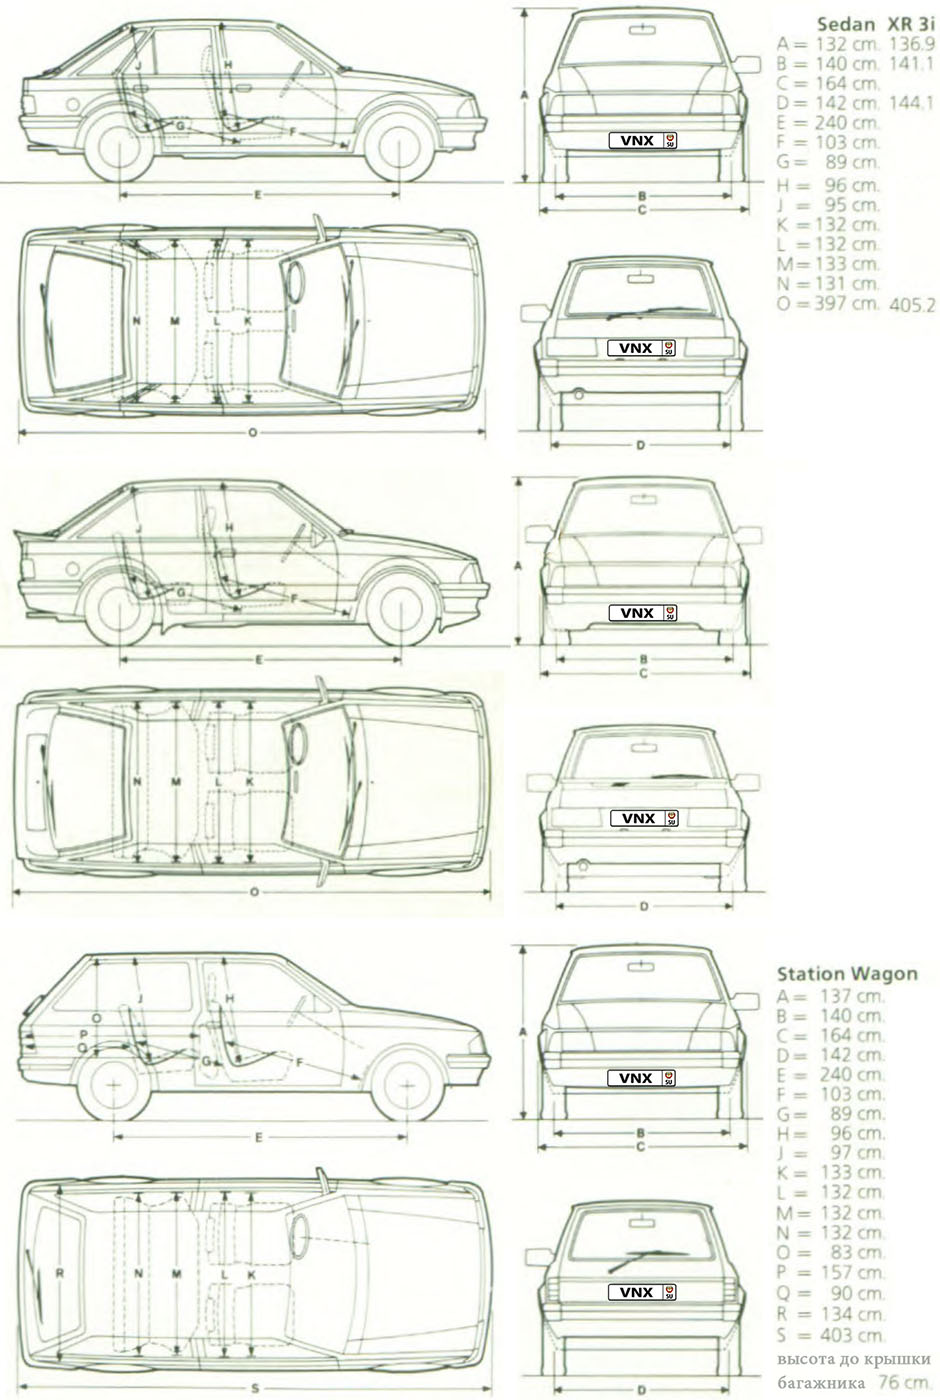 Габаритные размеры Форд Эскорт 1980-1986 все модели (dimensions Ford Escort mk3)